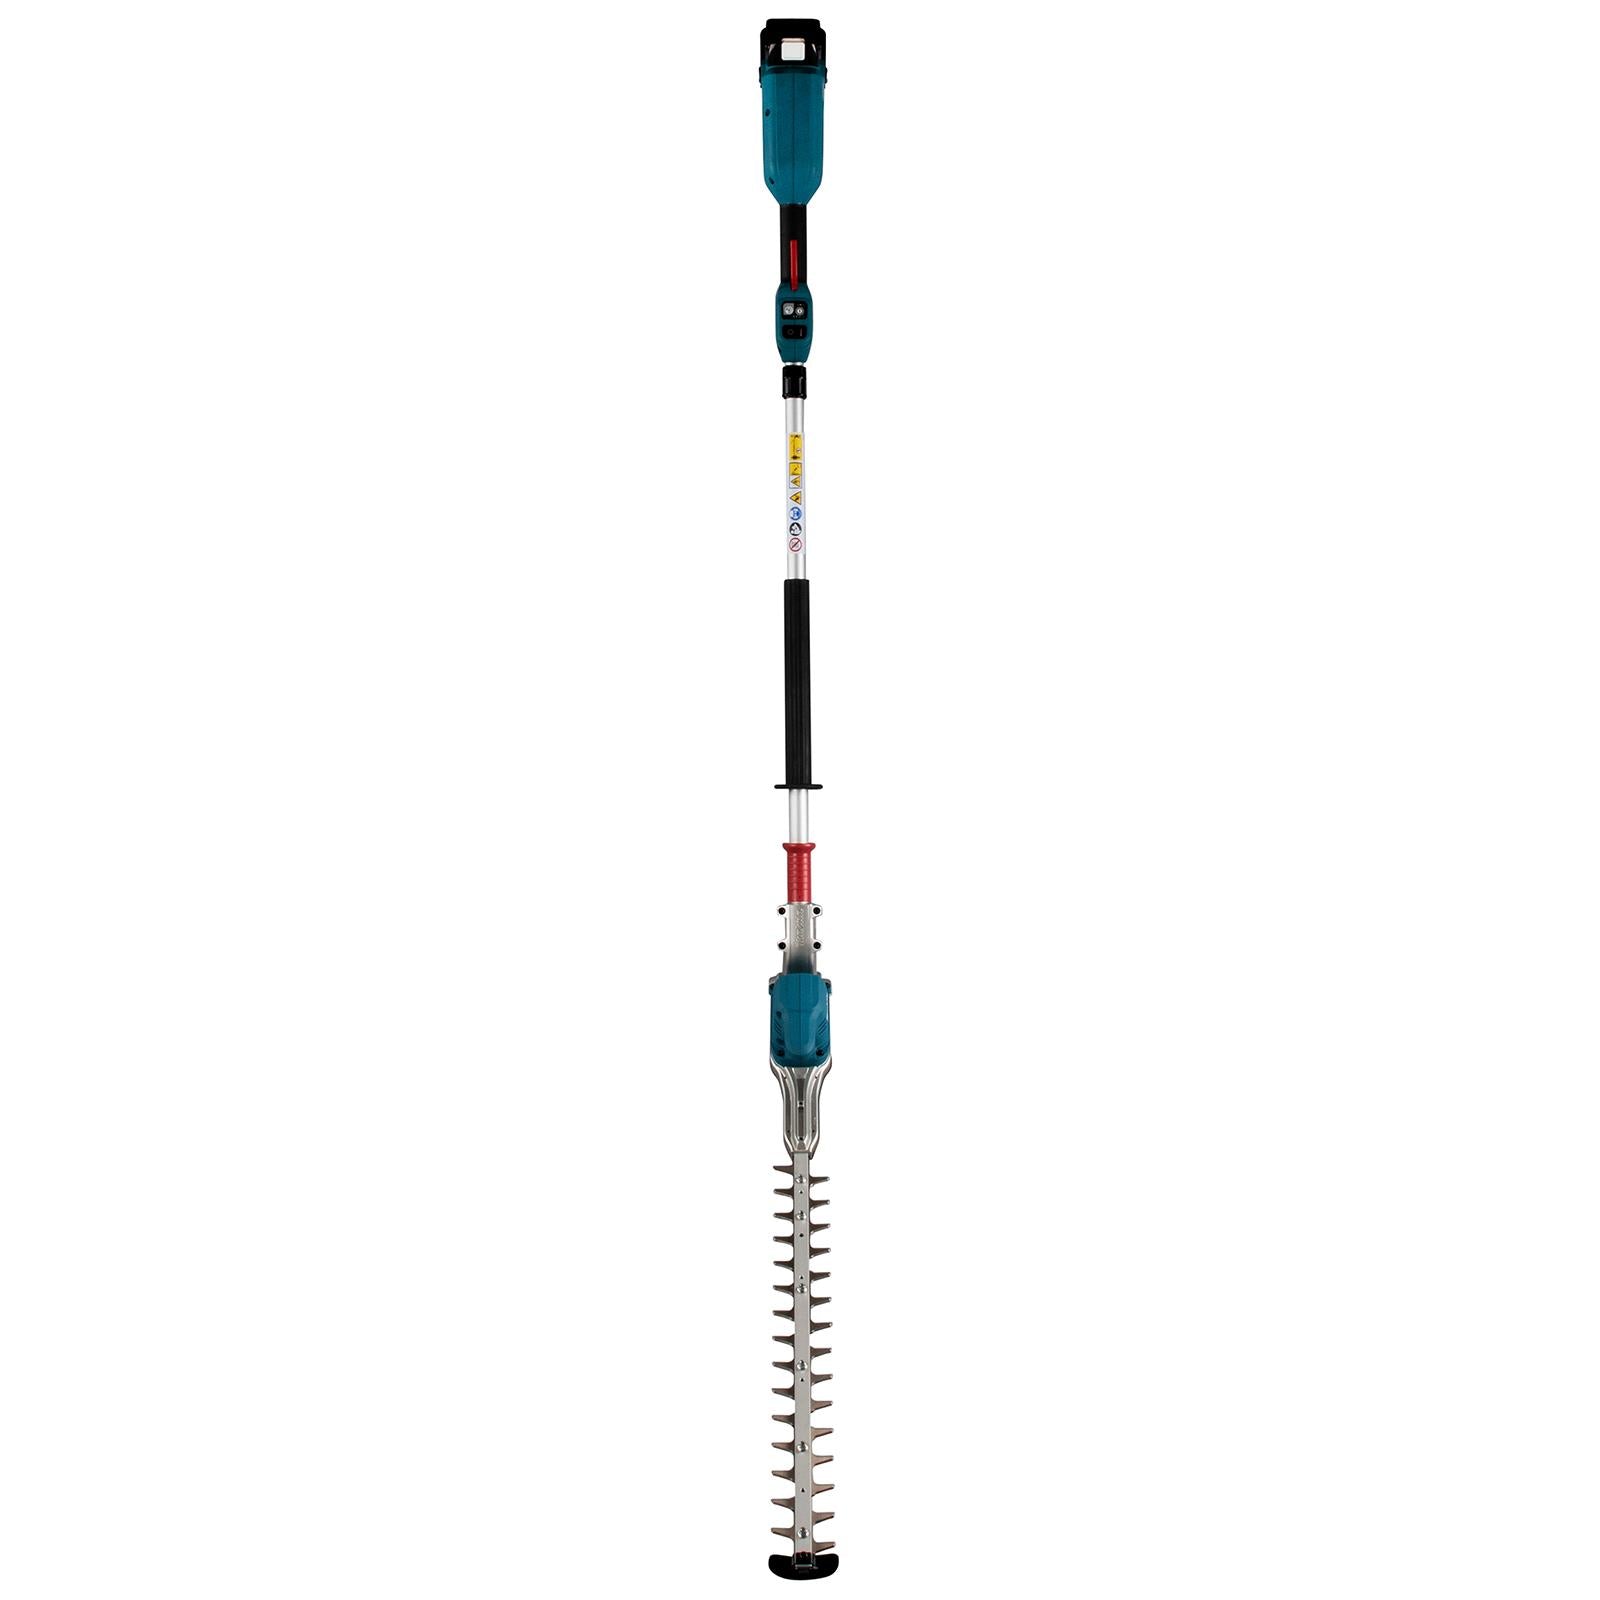 Makita Pole Hedge Trimmer Kit 50cm 18V LXT Li-ion Brushless Cordless 2 x 5Ah Battery and Charger Garden Bush Cutter Cutting DUN500WRTE